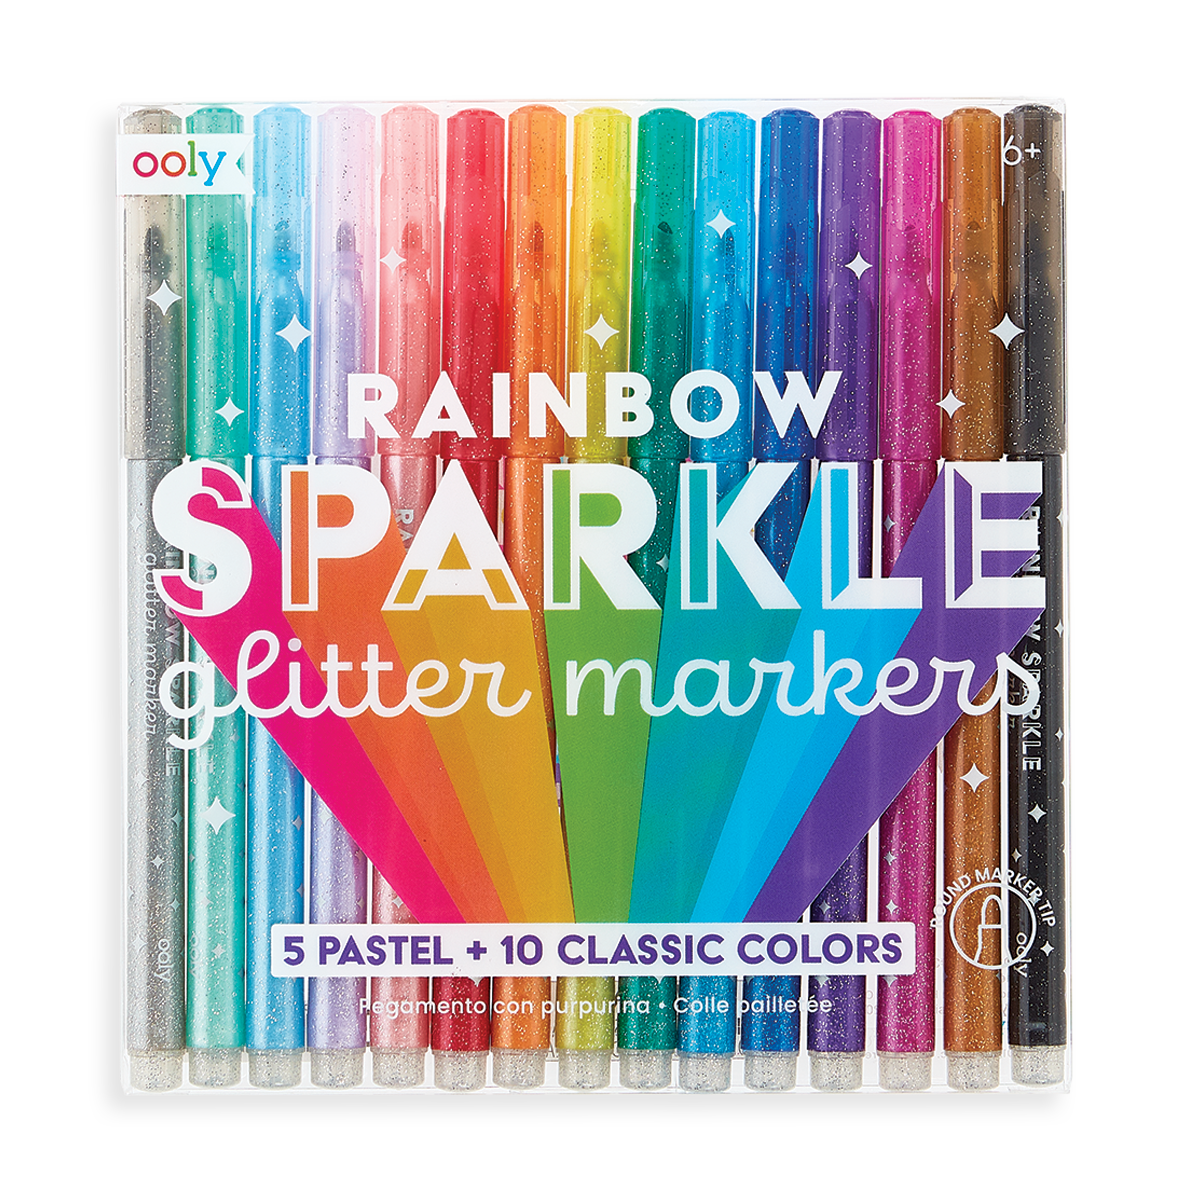 Rainbow Sparkle Glitter Markers - Set of 15